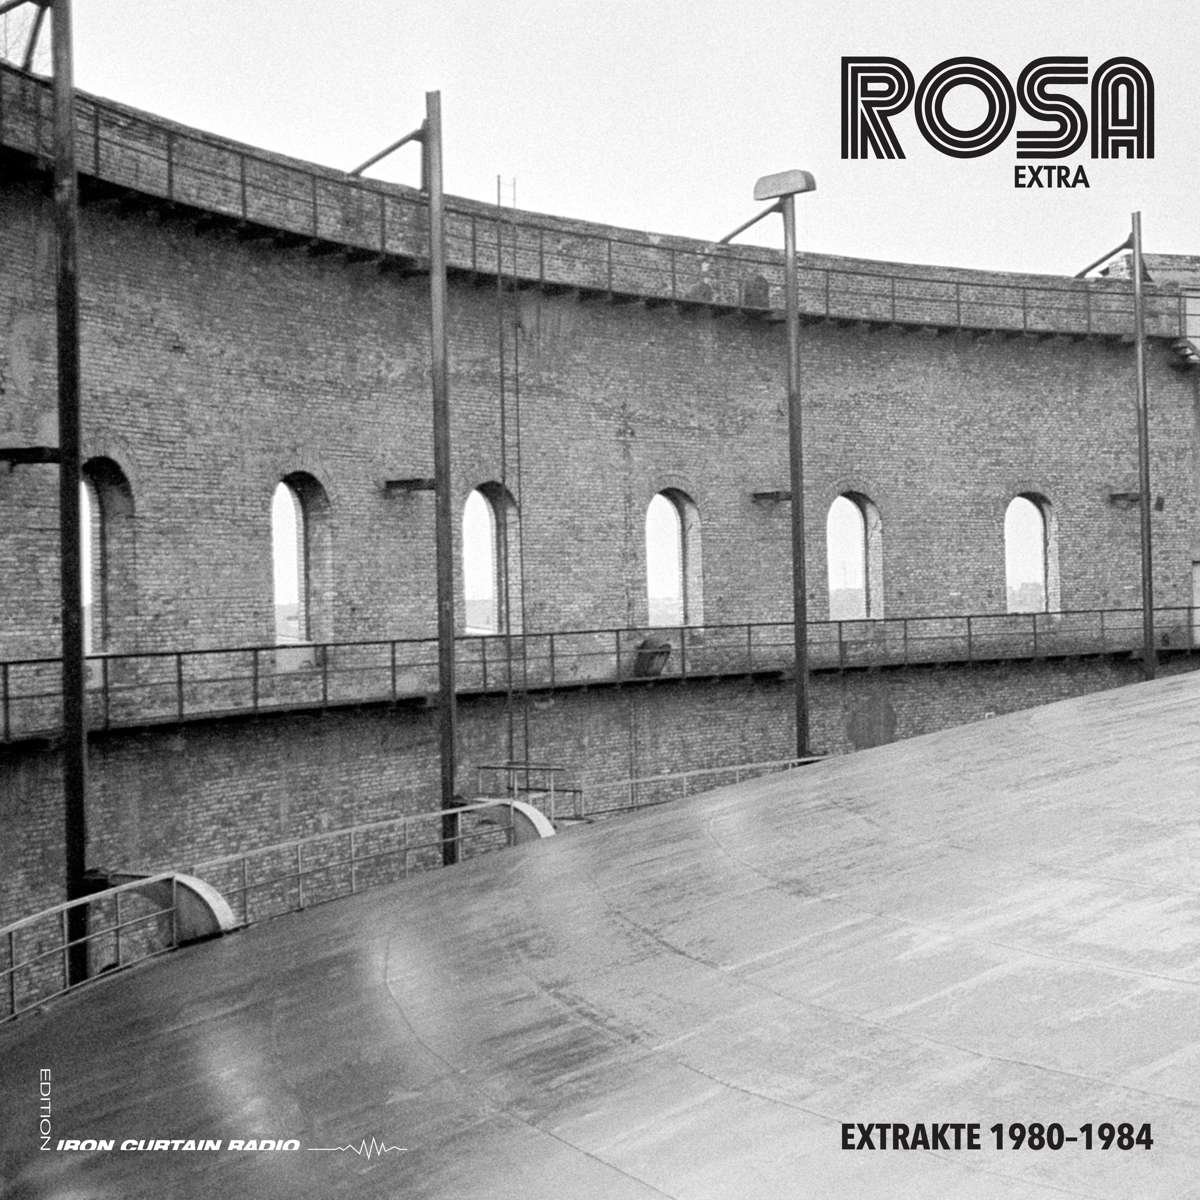 Rosa Extra - Extrakte 1980-1984 - LP